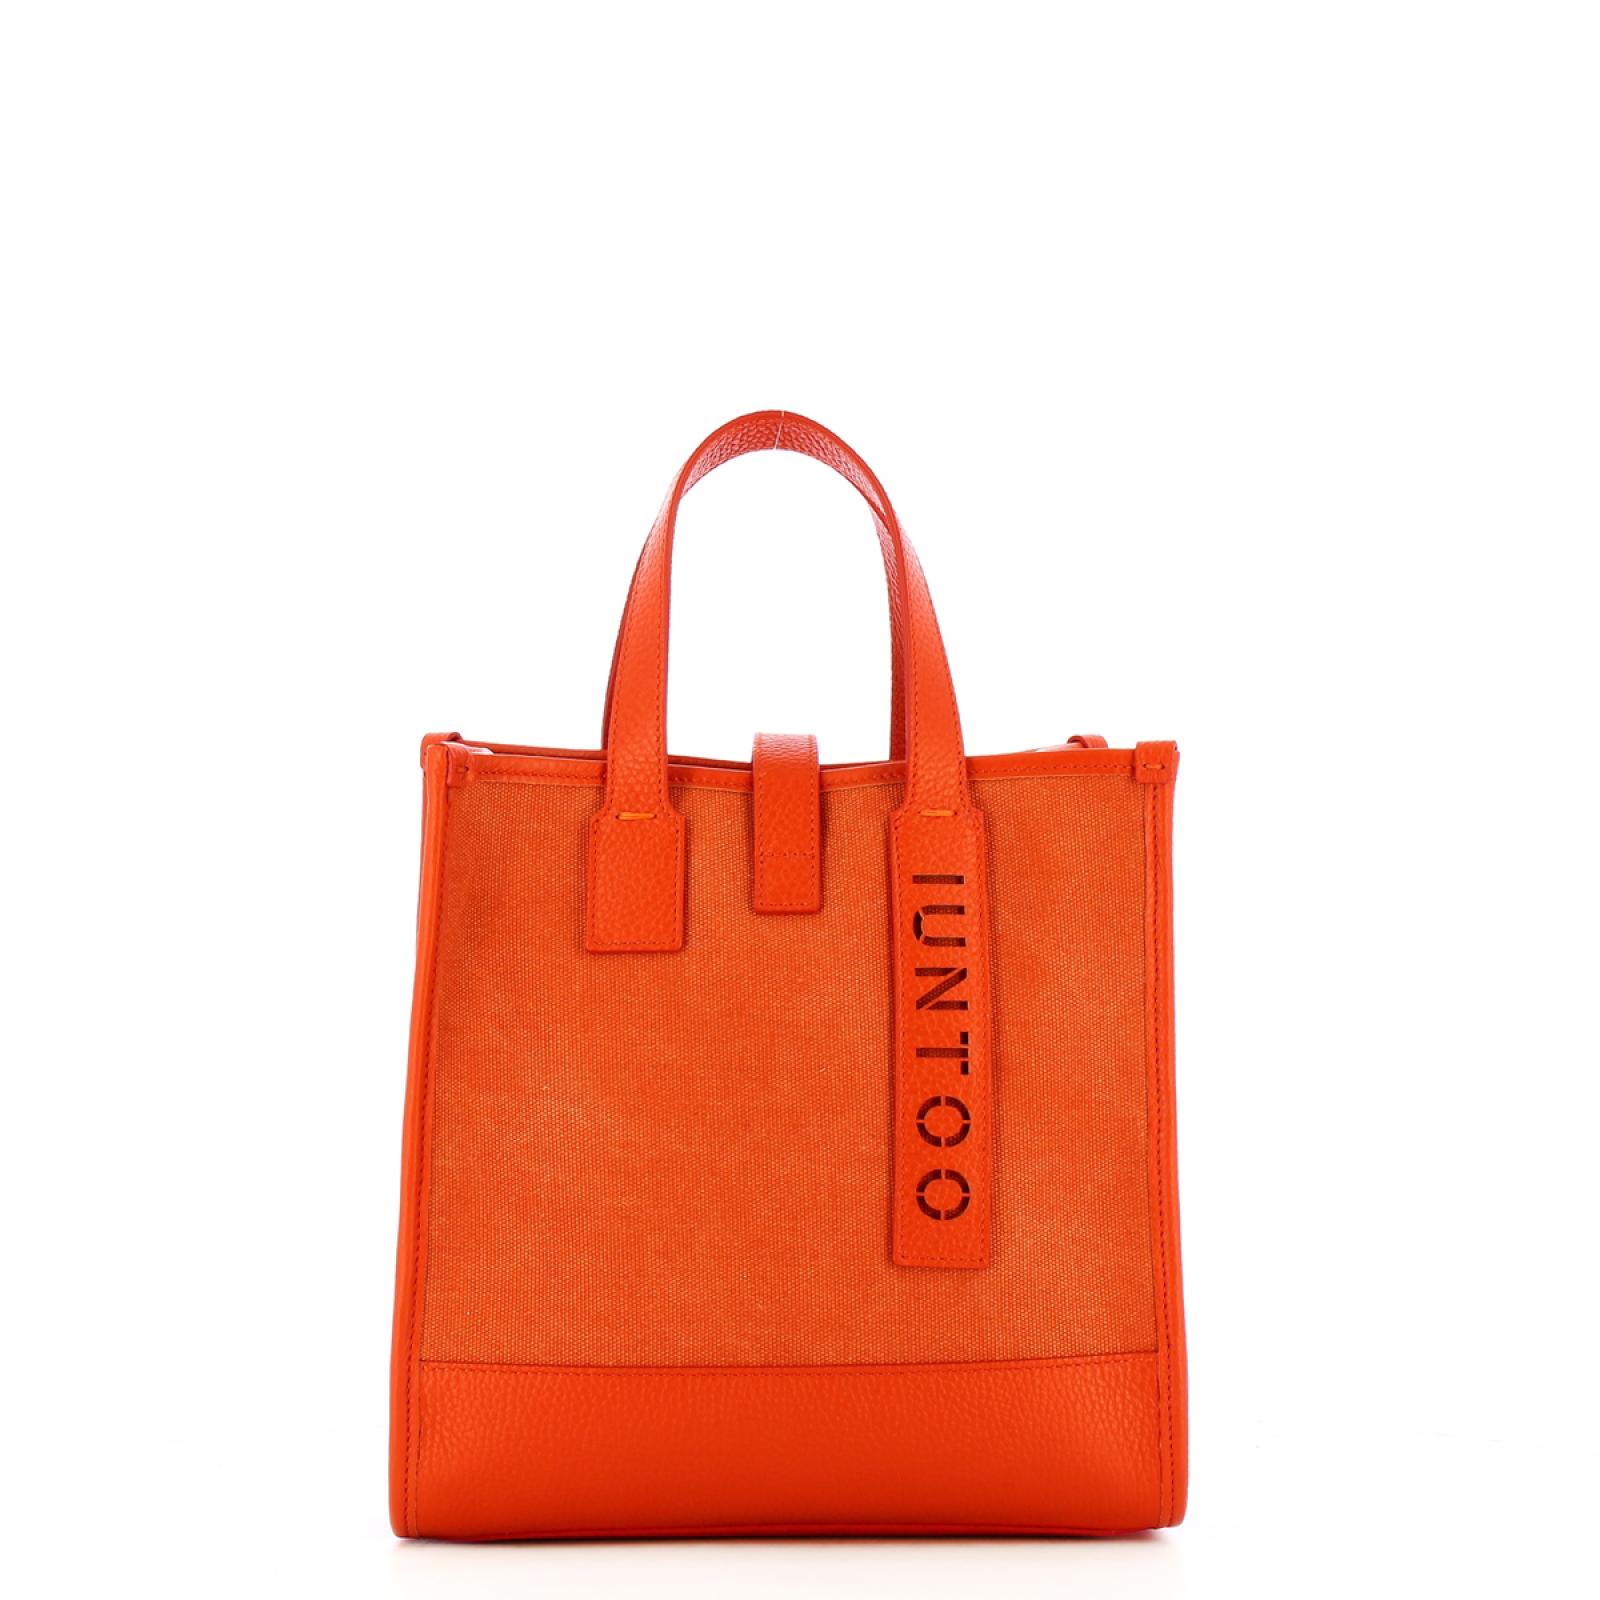 Iuntoo Shopper Piccola Essenziale Arancio Arancio - 1